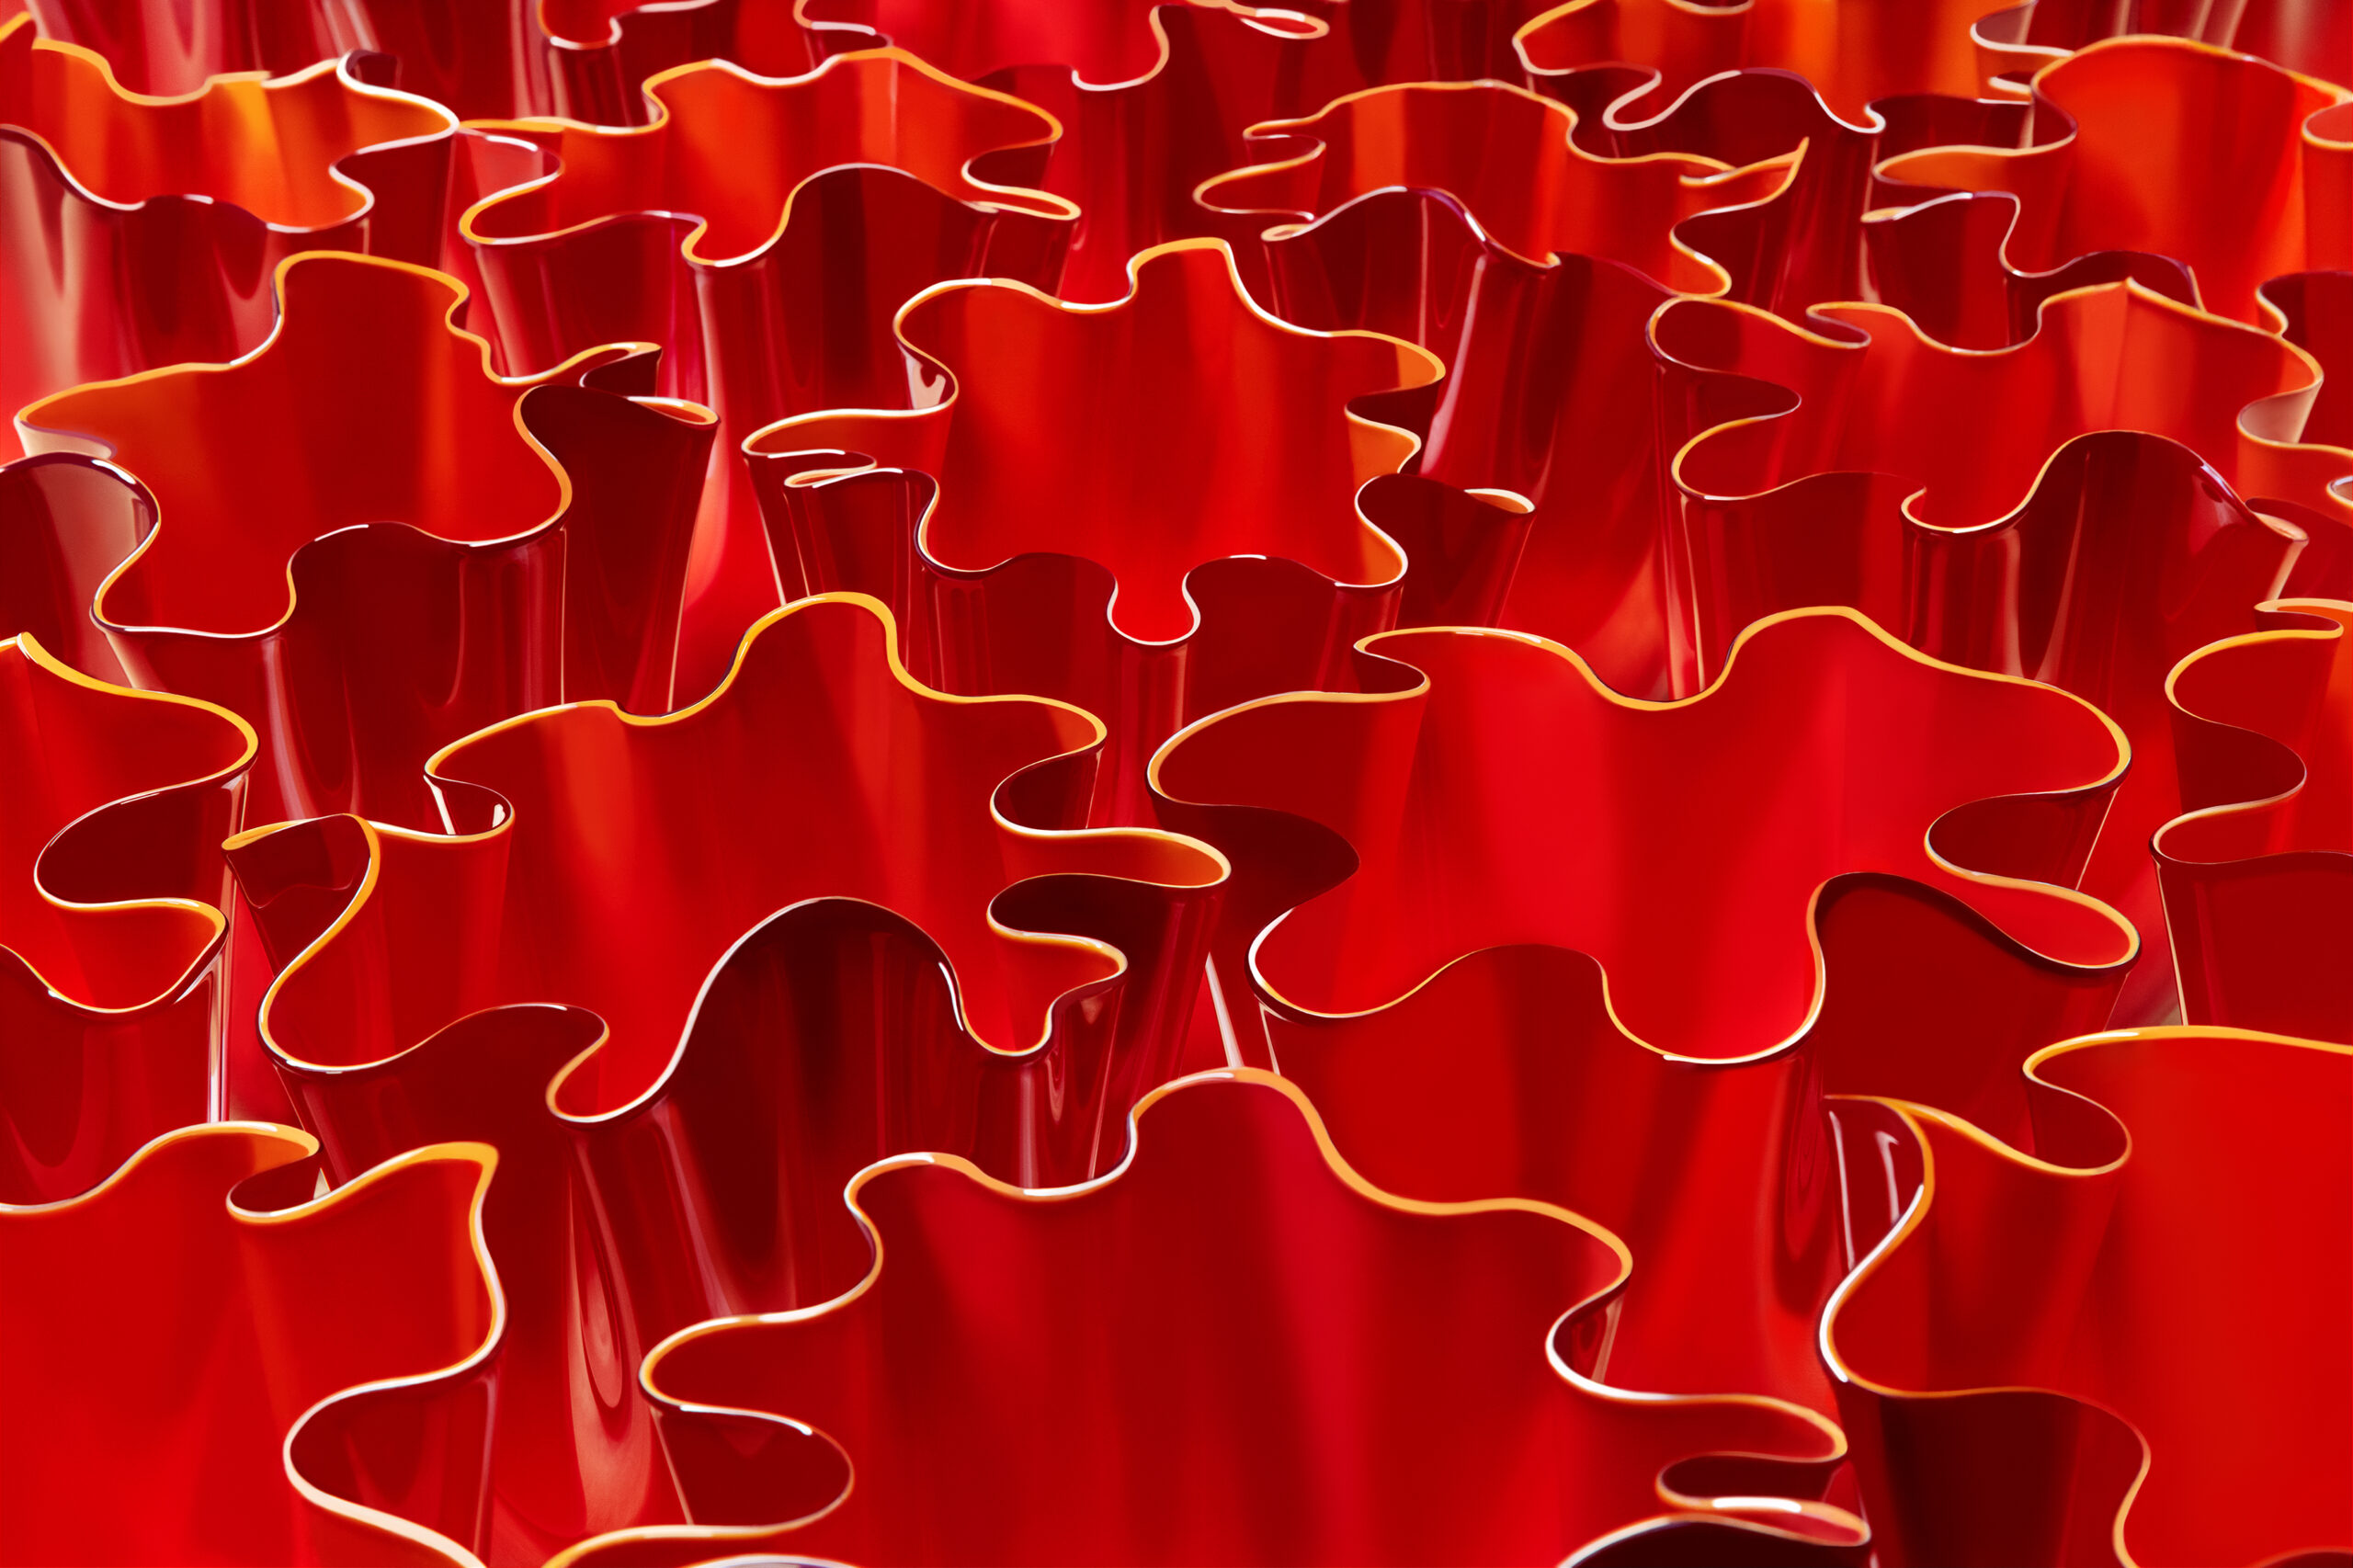 Lucrezia Roda, “RED WATER LILIES”, 2022, Stampa Giclée su carta Baritata, montata sotto Plexiglas® 4mm, courtesy Lucrezia Roda e Cortesi Gallery